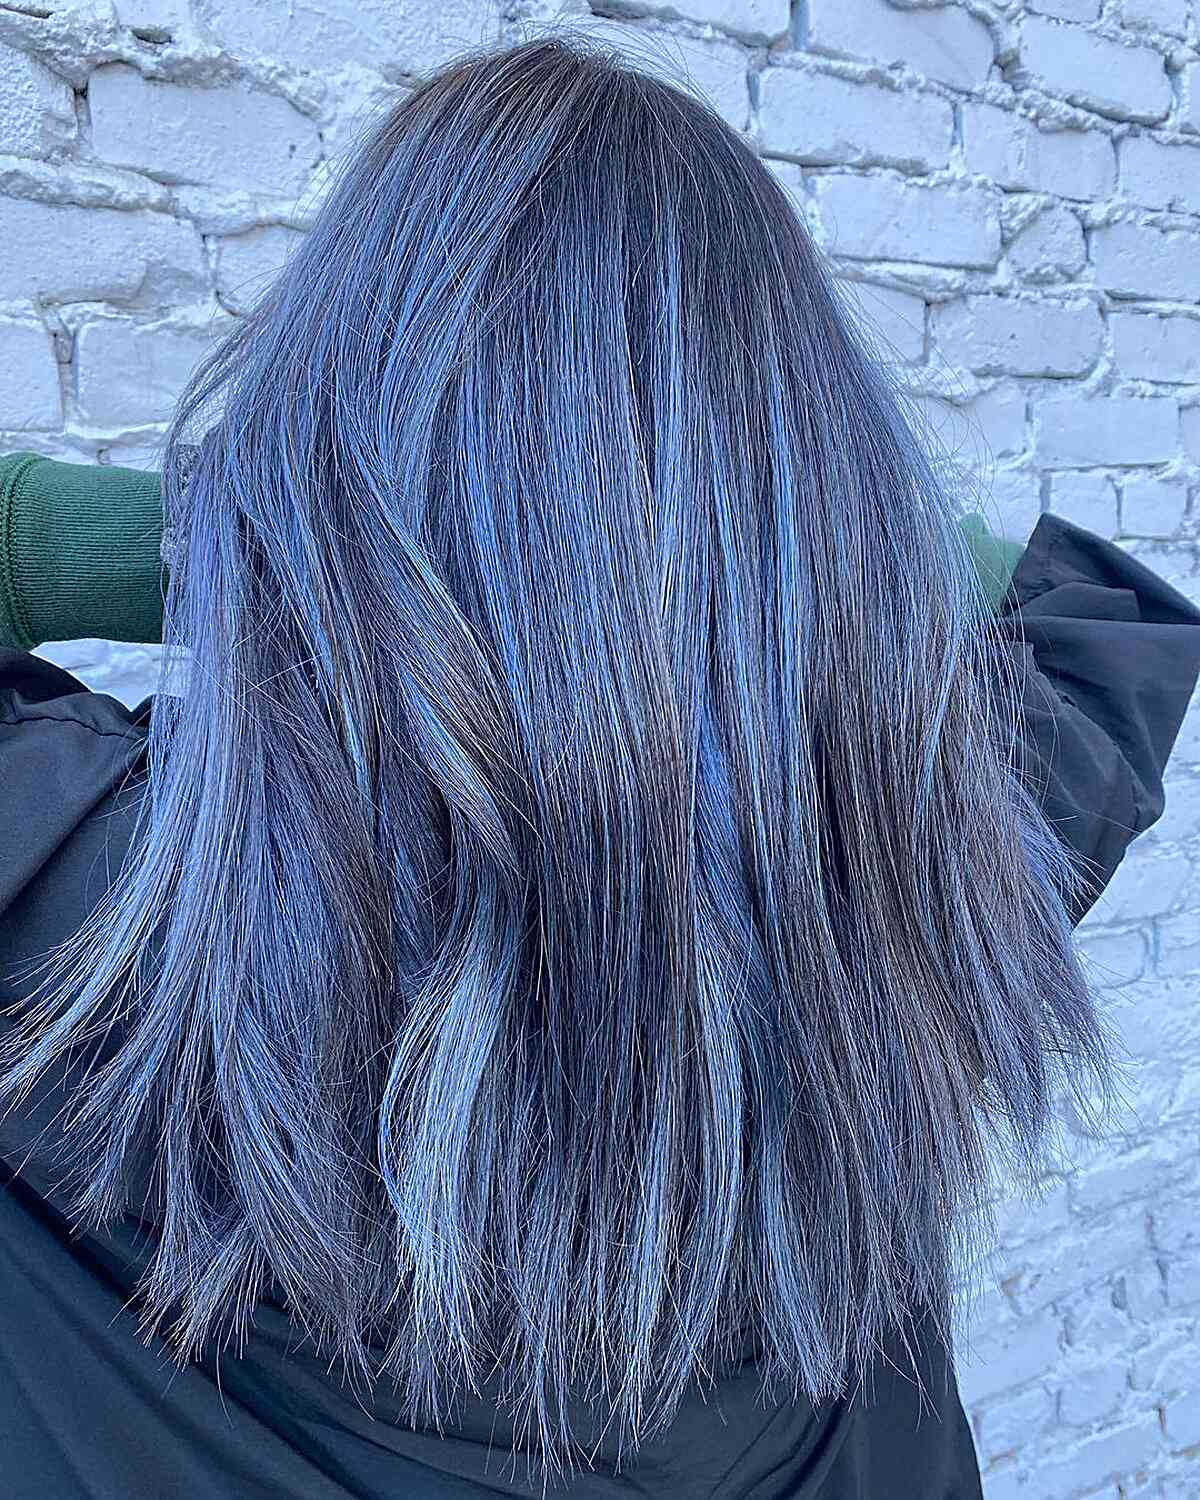 Icy Blue Hair Balayage Highlights on Mid-Length Choppy Haircut